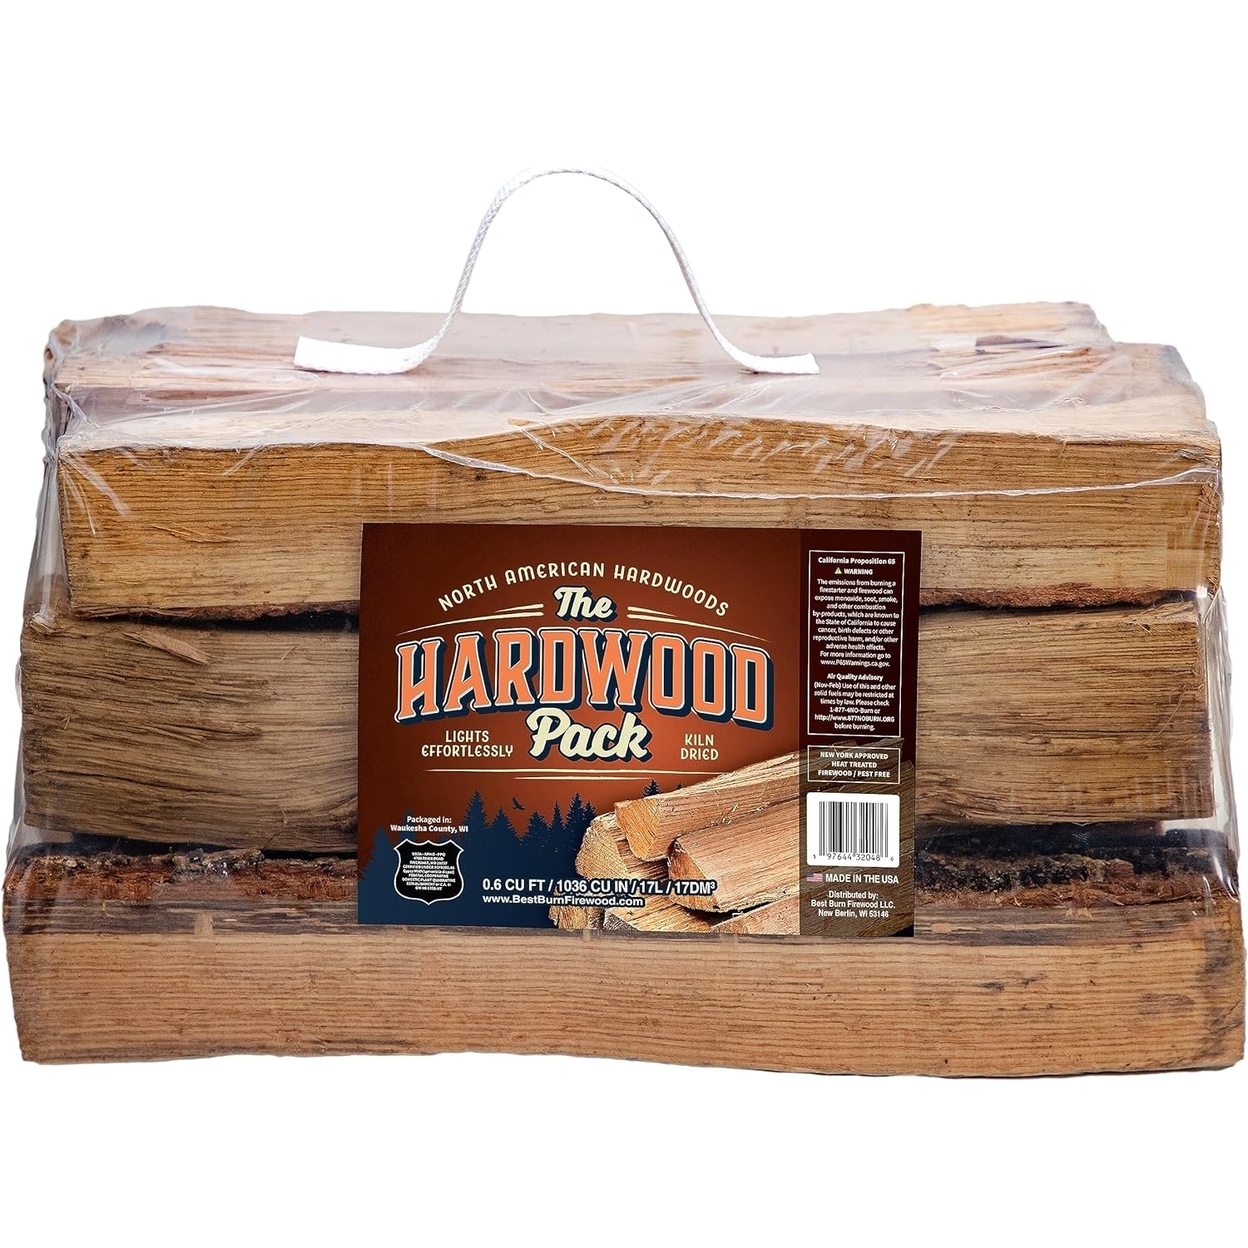 The Hardwood Pack Kiln-Dried Firewood, 0.6 Cubic Feet